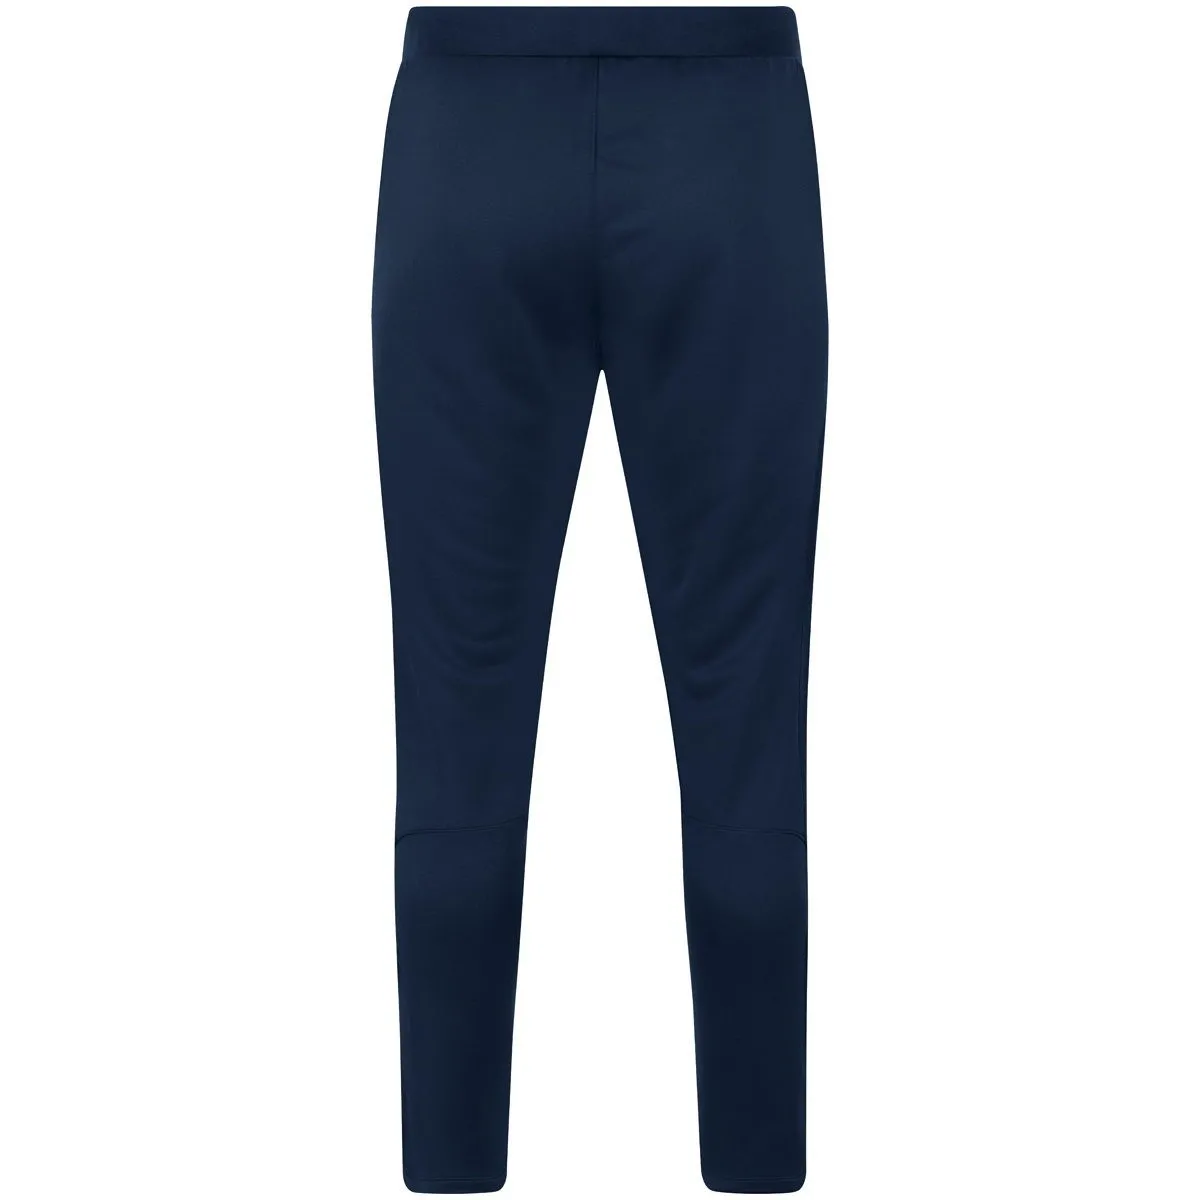 Jako training trousers Allround dark blue